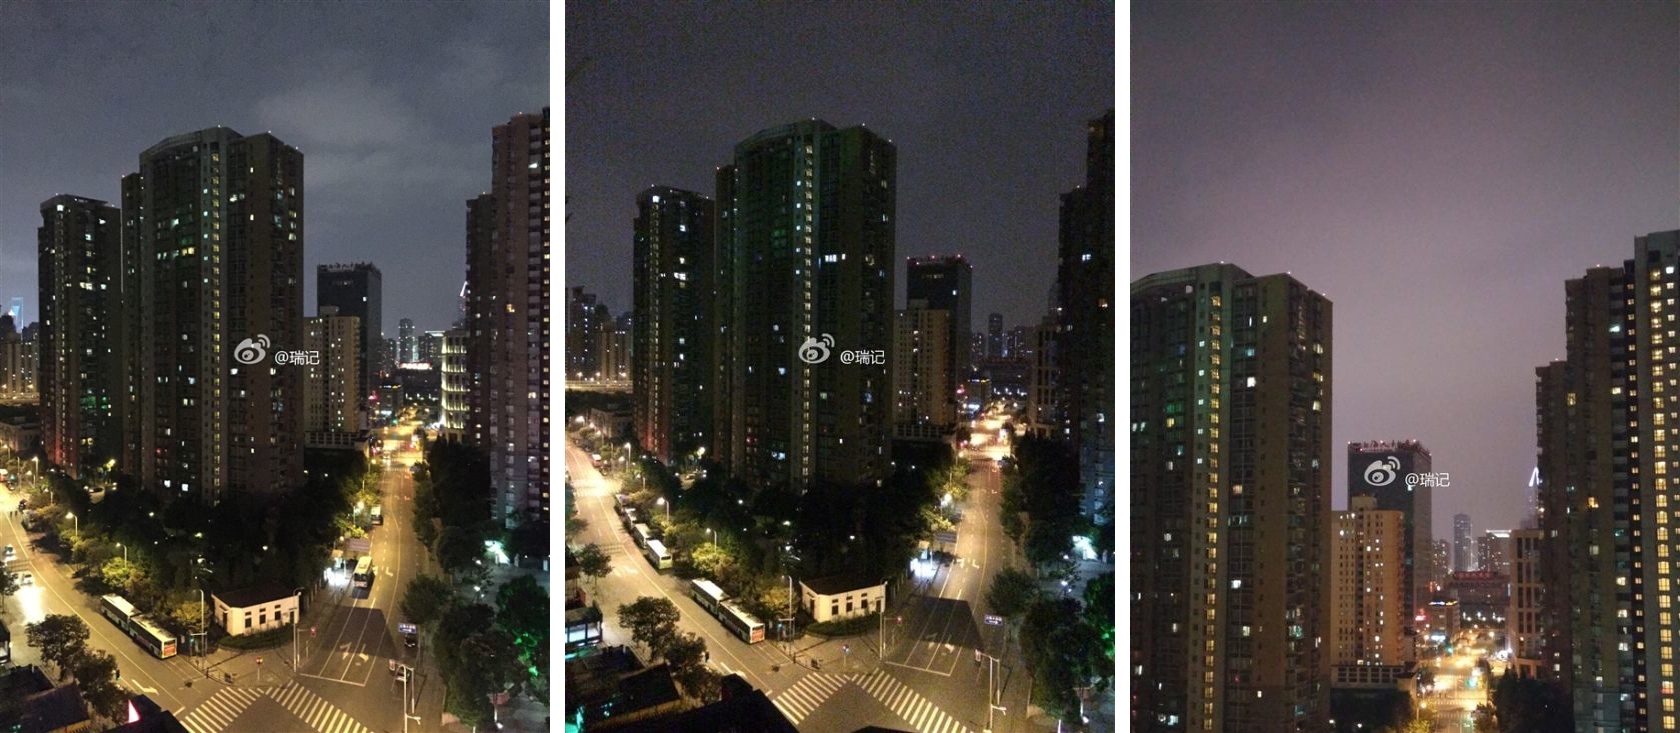 Camera comparison (iPhone 6 vs iPhone 5s vs LG G3)